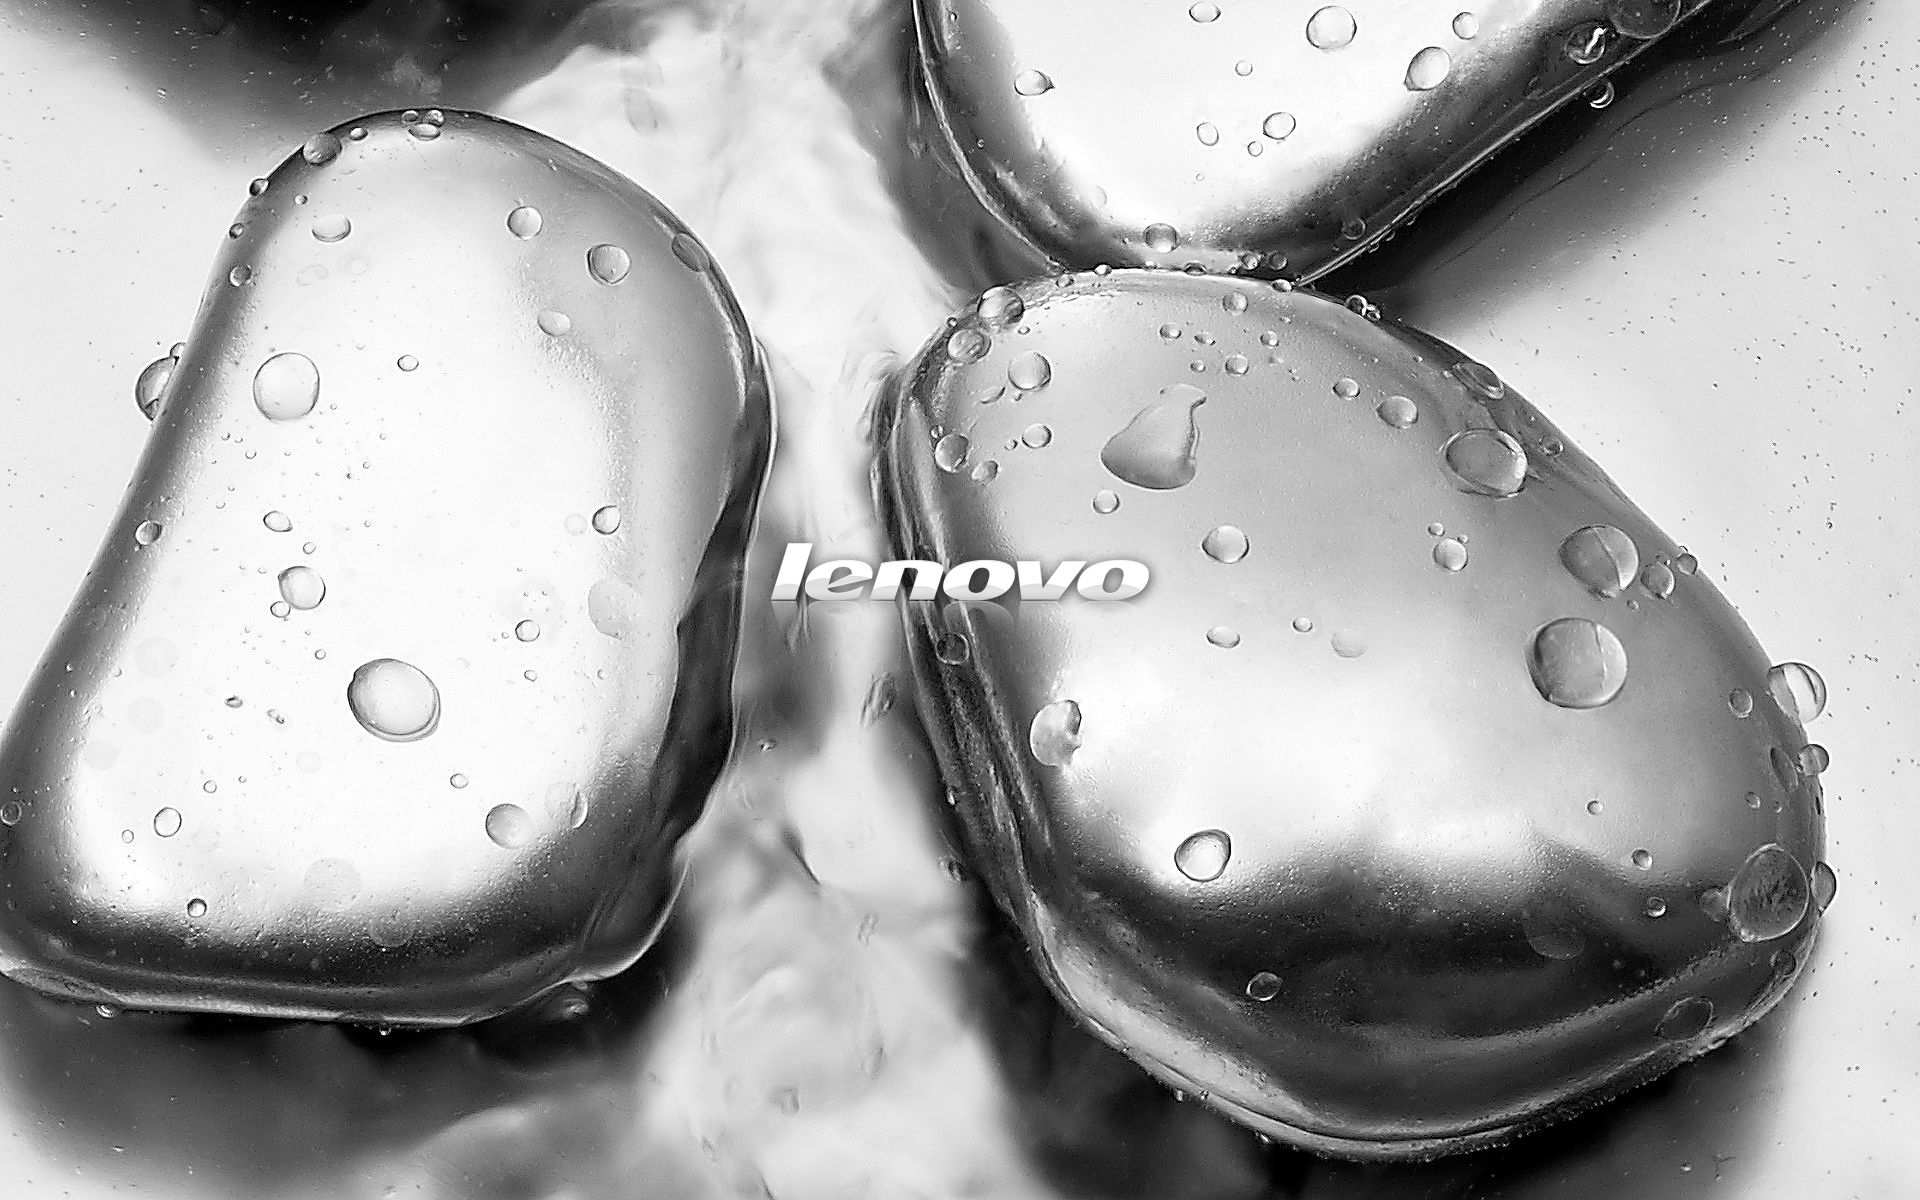 lenovo wallpaper,water,drop,footwear,still life photography,photography